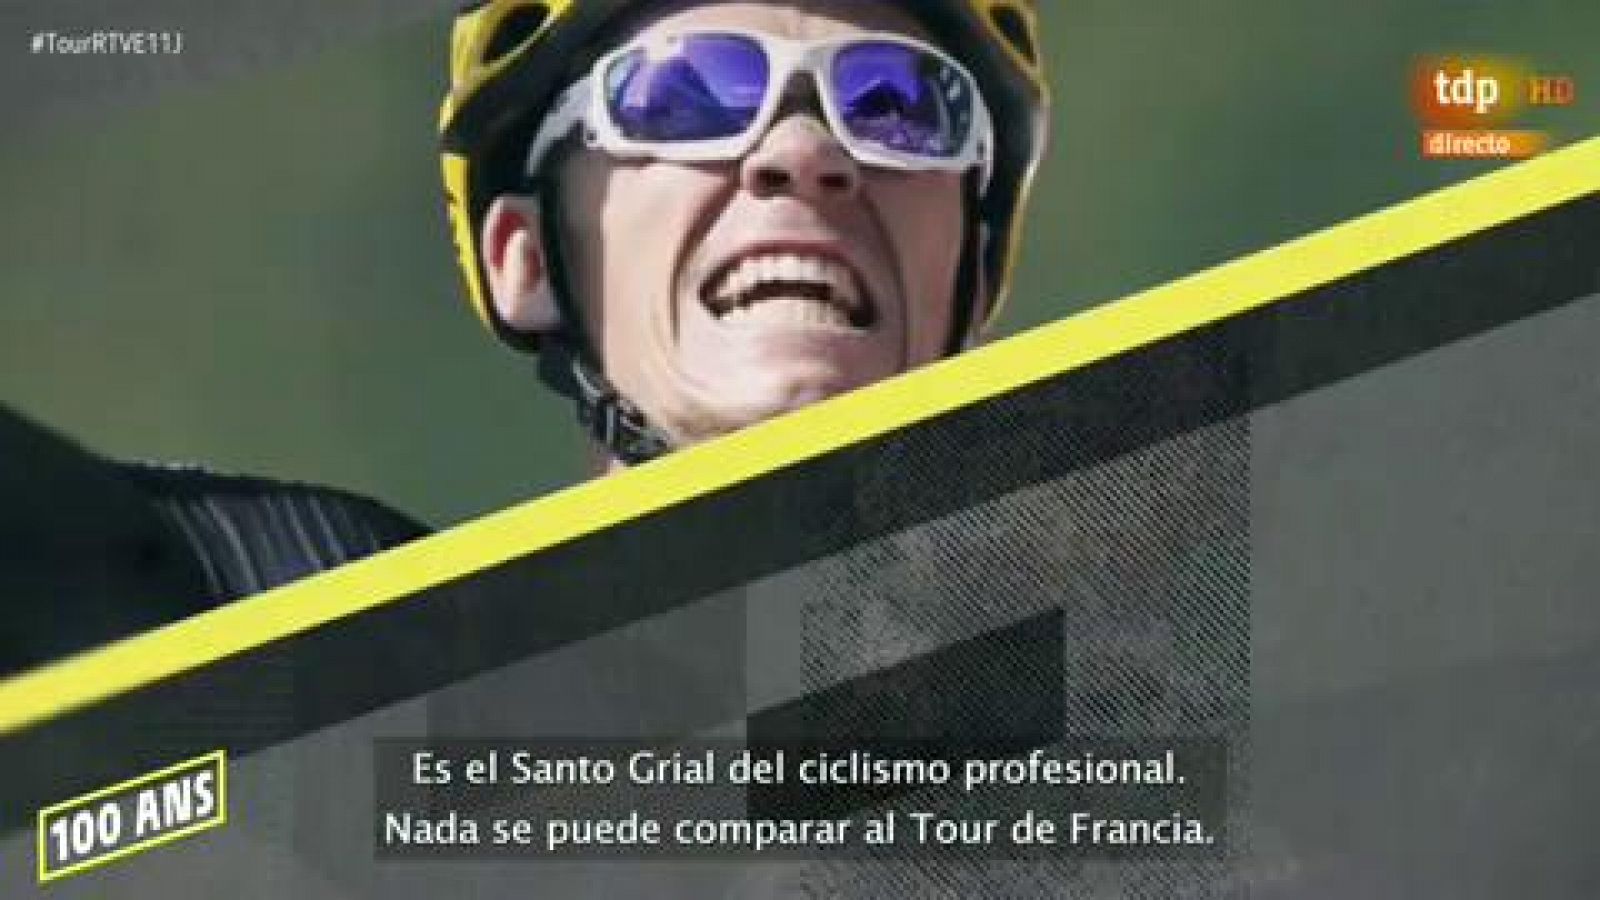 Tour de Francia: Tour 2019: Chris Froome: "El Tour de Francia es el Santo Grial del ciclismo profesional" | RTVE Play